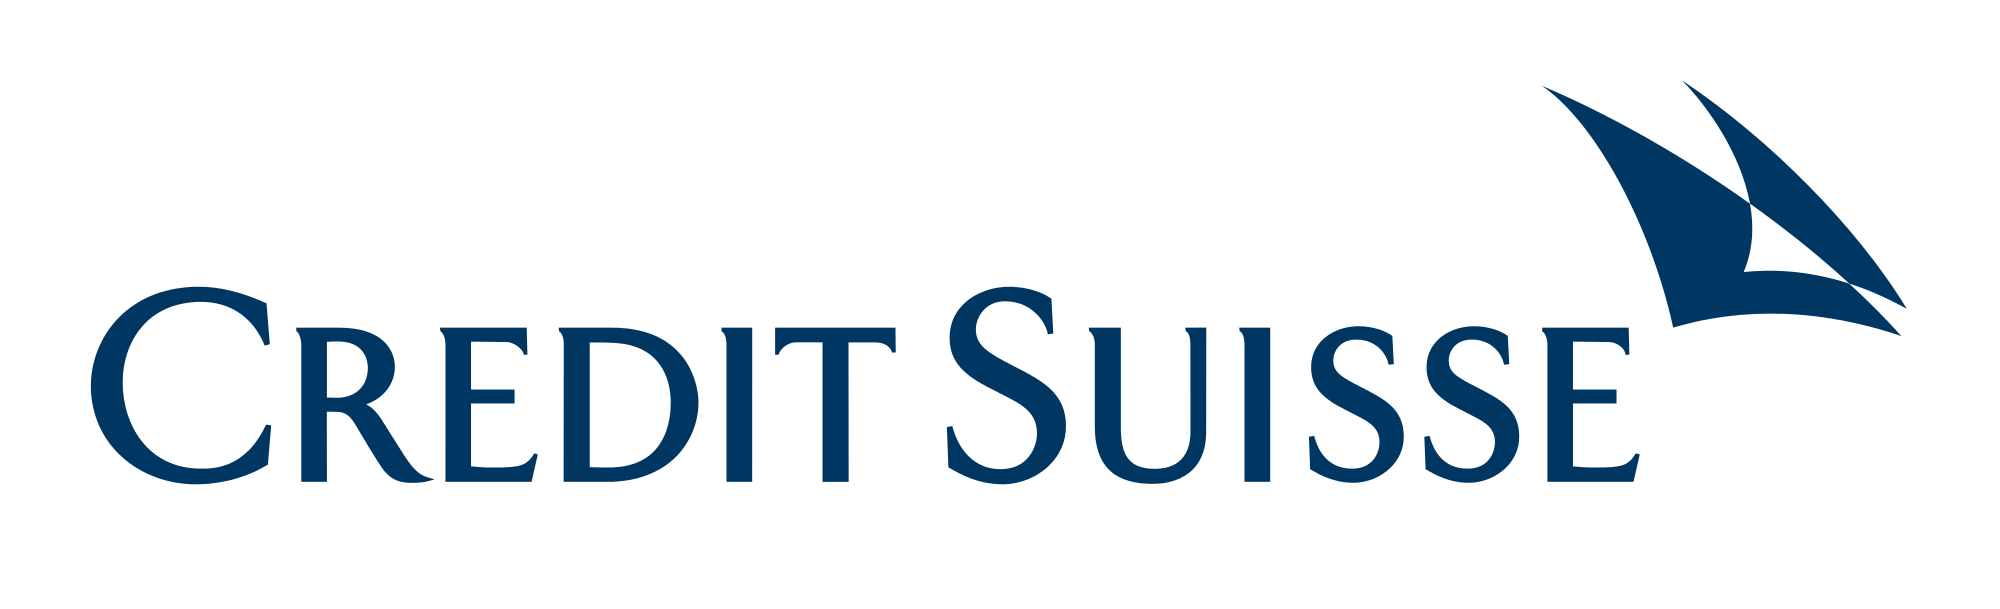 Credit Suisse Logo - Credit Suisse Logo - HPA